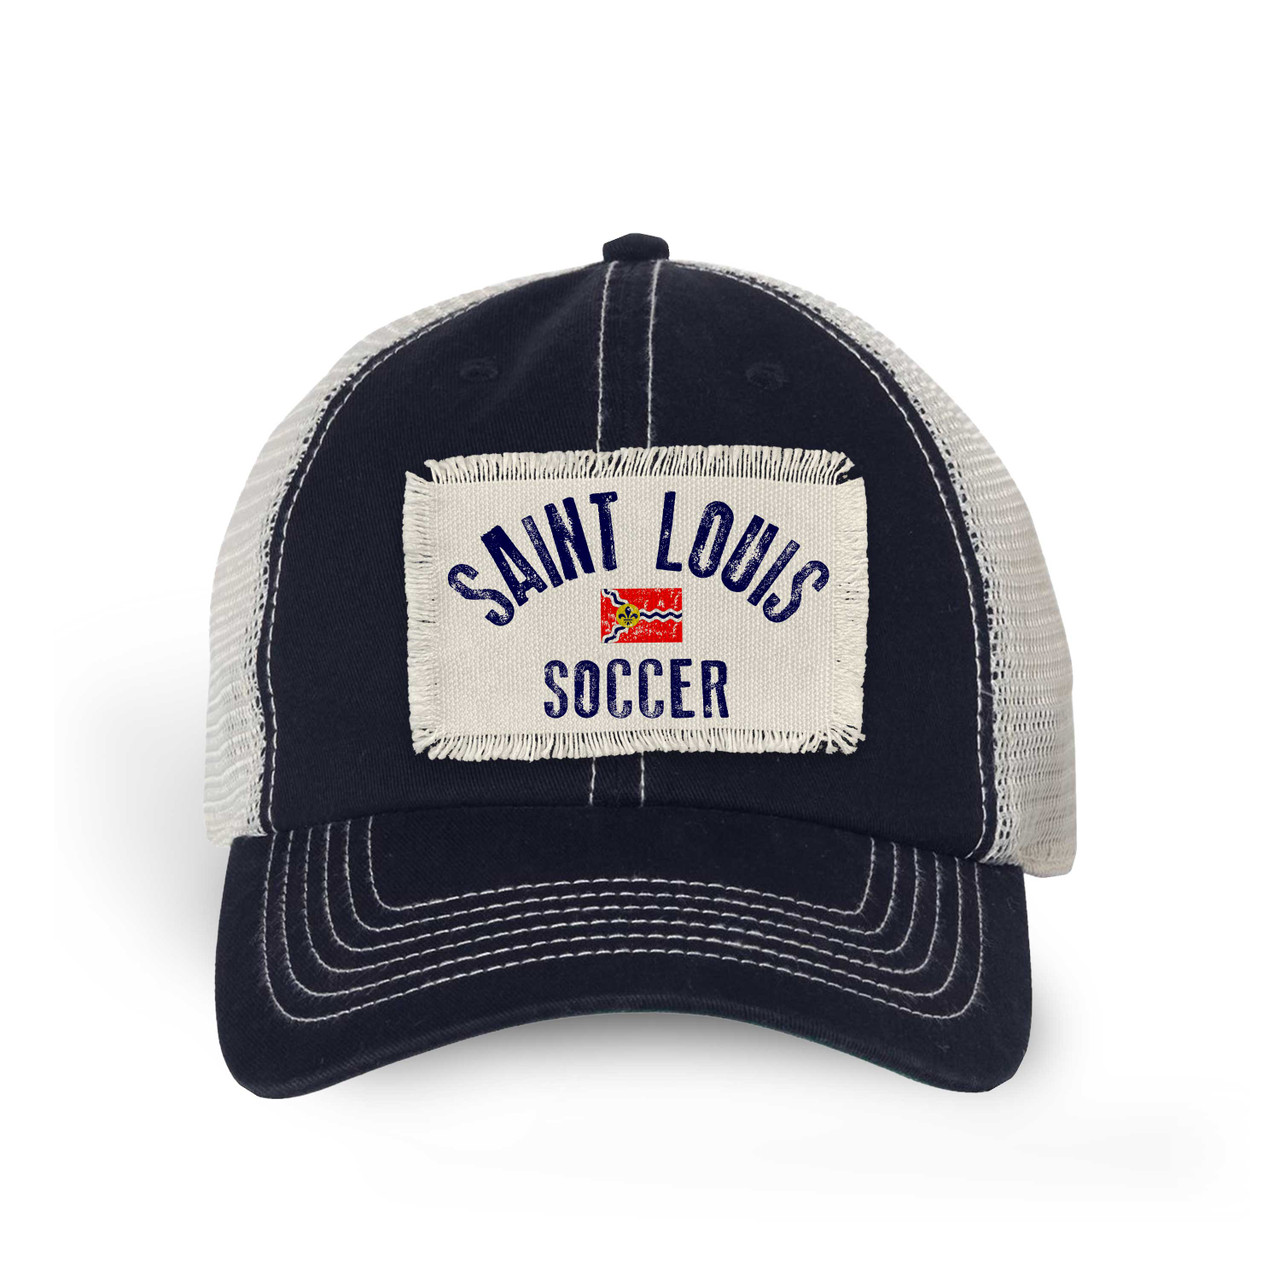 soccer cap, raggy patch st louis soccer city regular or trucker hat